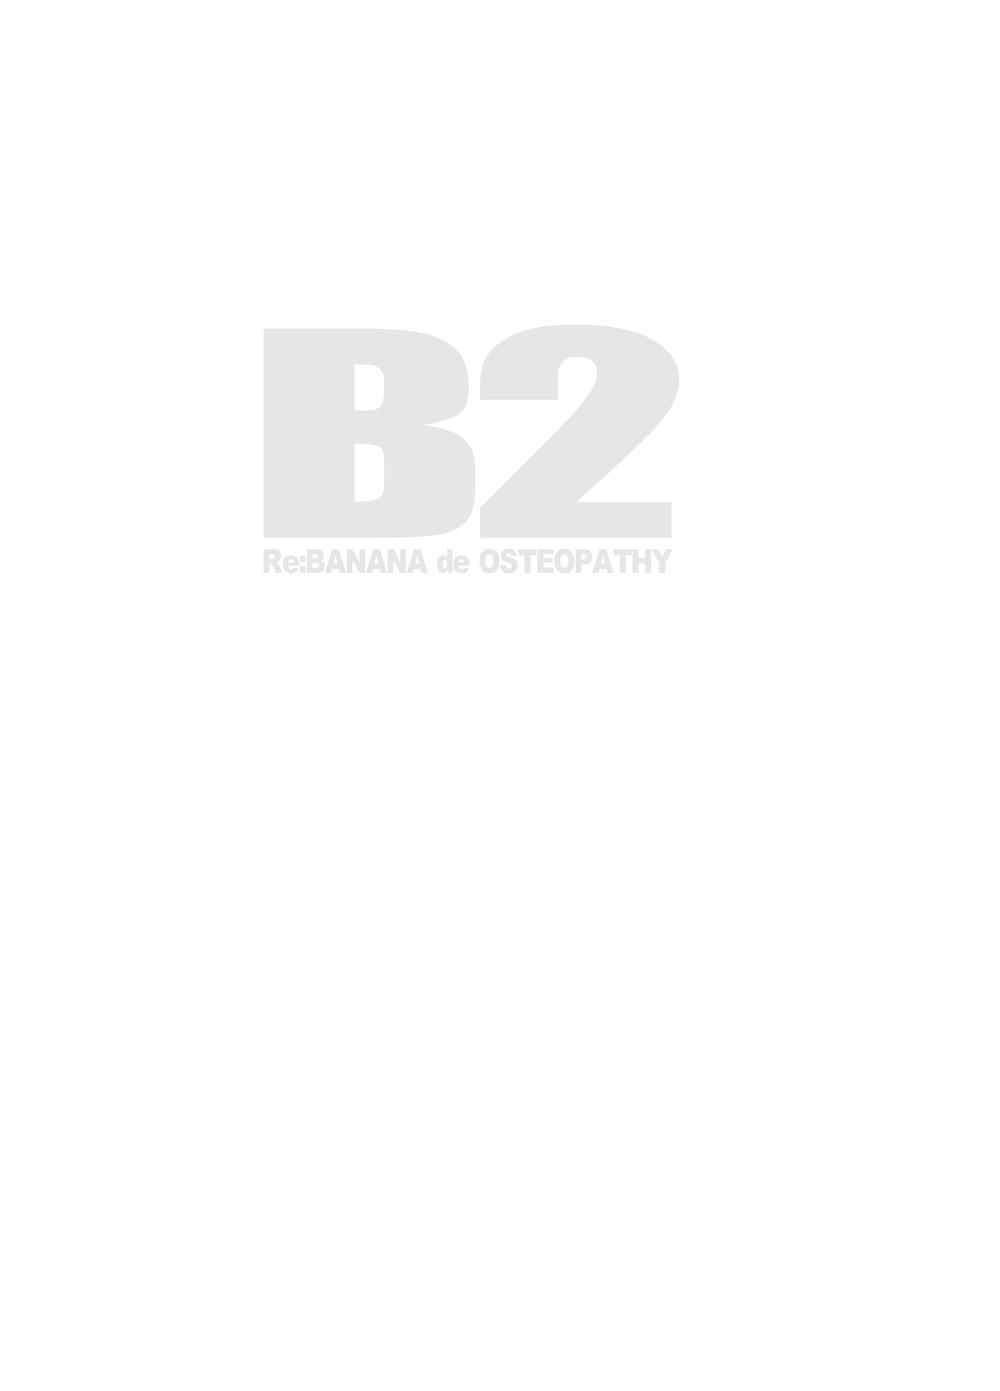 Pierced B2:Re BANANA de OSTEOPATHY Canadian - Page 2